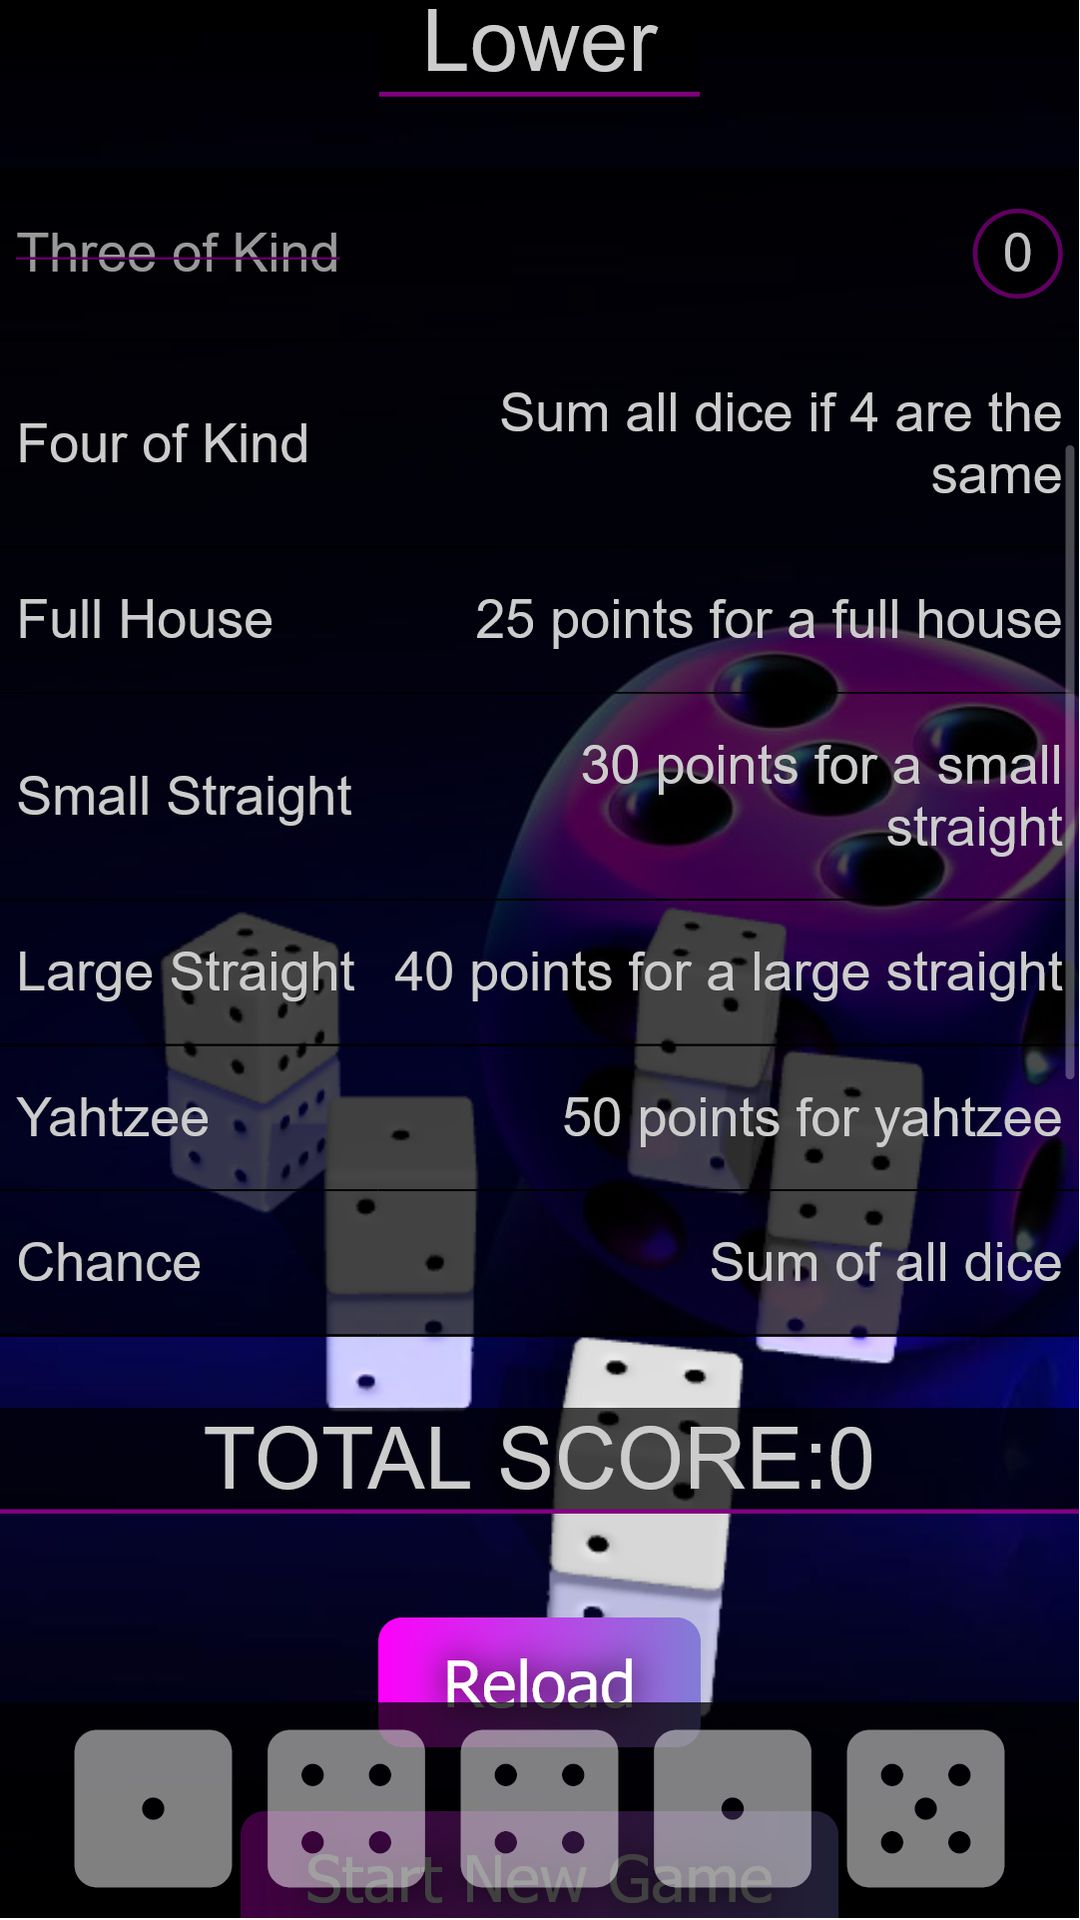 Yahtzee: Classic Dice Game